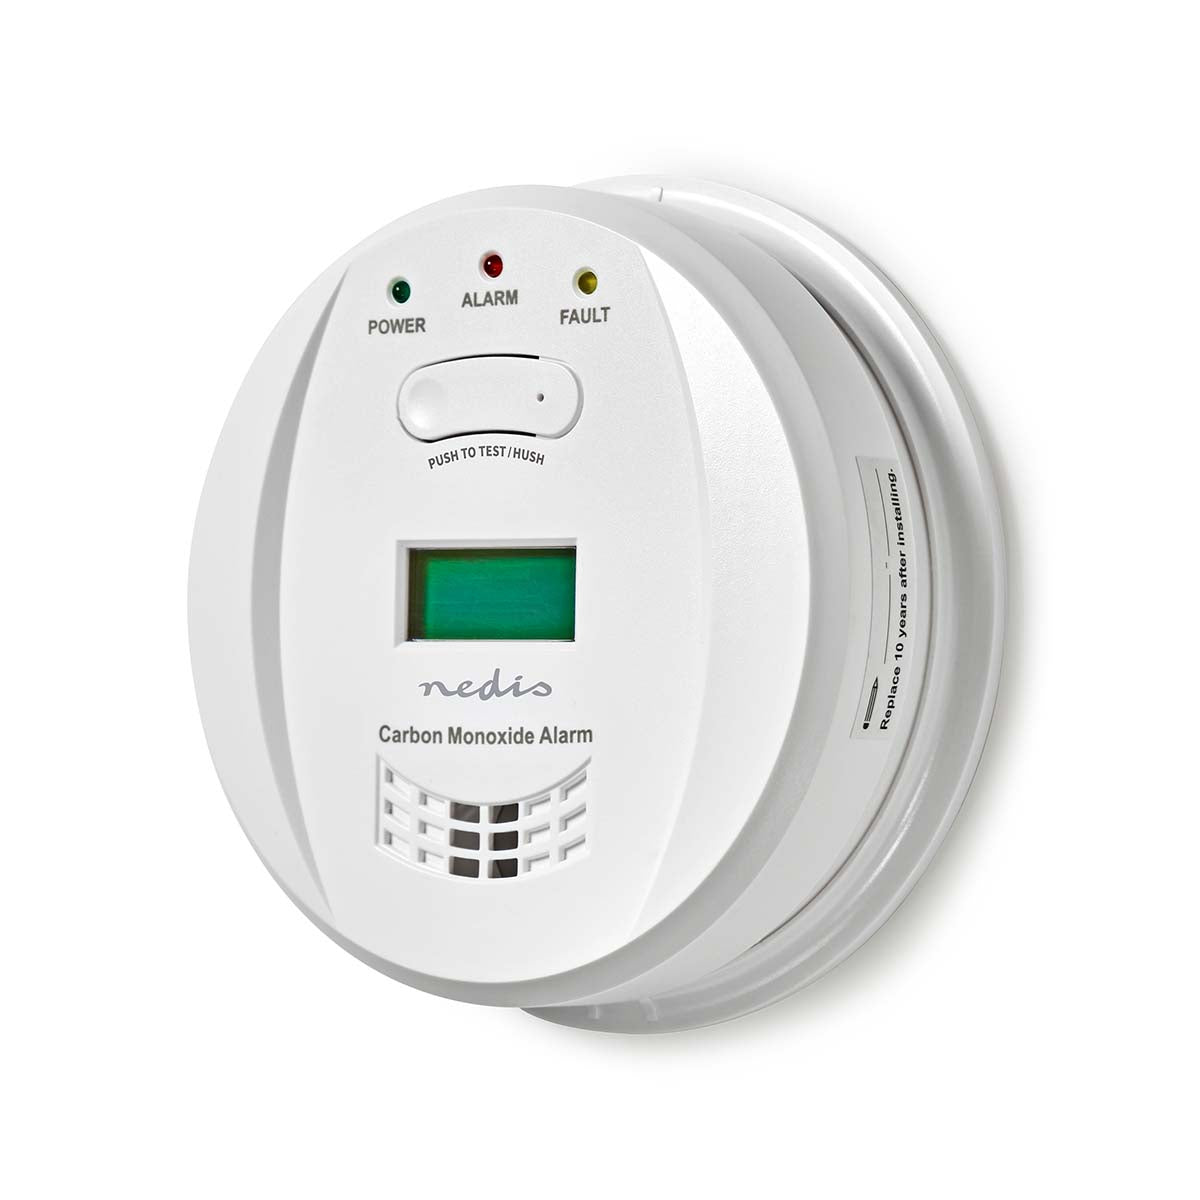 Nedis Carbon Monoxide Alarm, Carbon Monoxide Detector, 5 Year Battery Life, LCD Display, 85 dB Alarm, Easy Installation